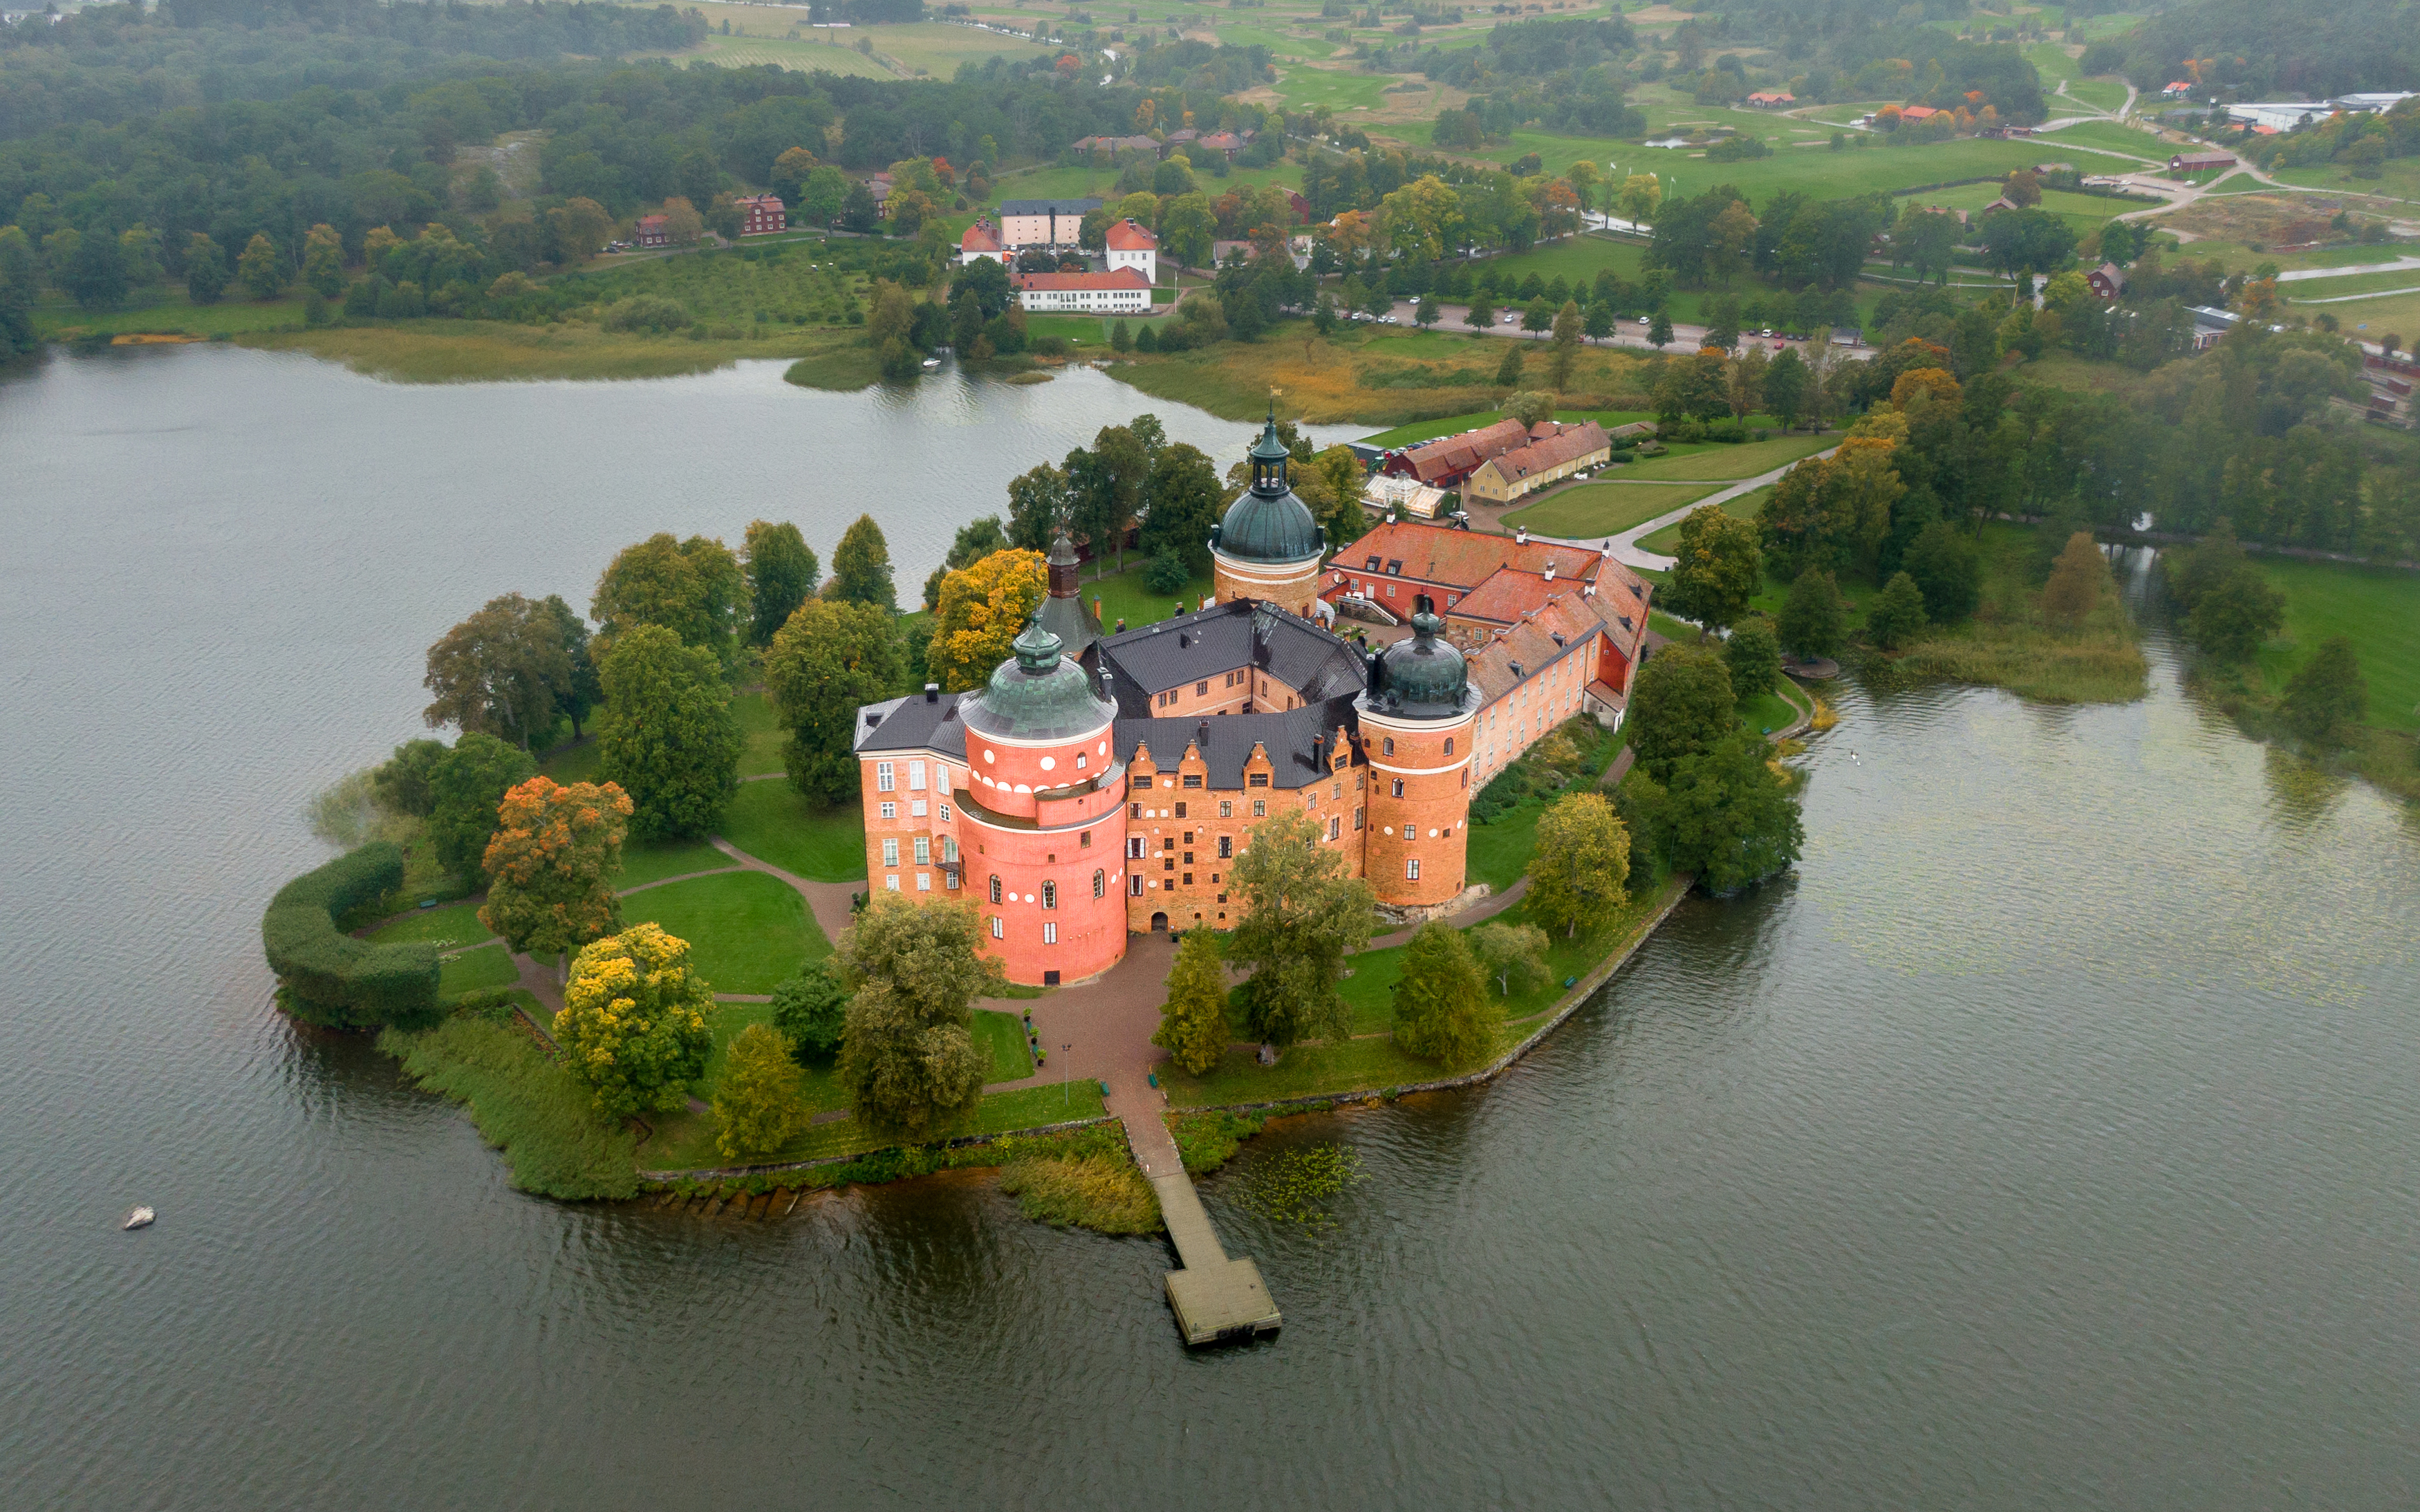 #visitsweden, #beautifulsweden, #sweden, #swedenimages, #gripsholmsslott, #castle, #castles, #gripsholmcastle, #autumnvibes, #autumn, #rainyday, #europetravel, #dronephotography, #droneoftheday, #dji, #drone, #autumncolors, #destinations, #beautifuldestin, Nikolai Mordan